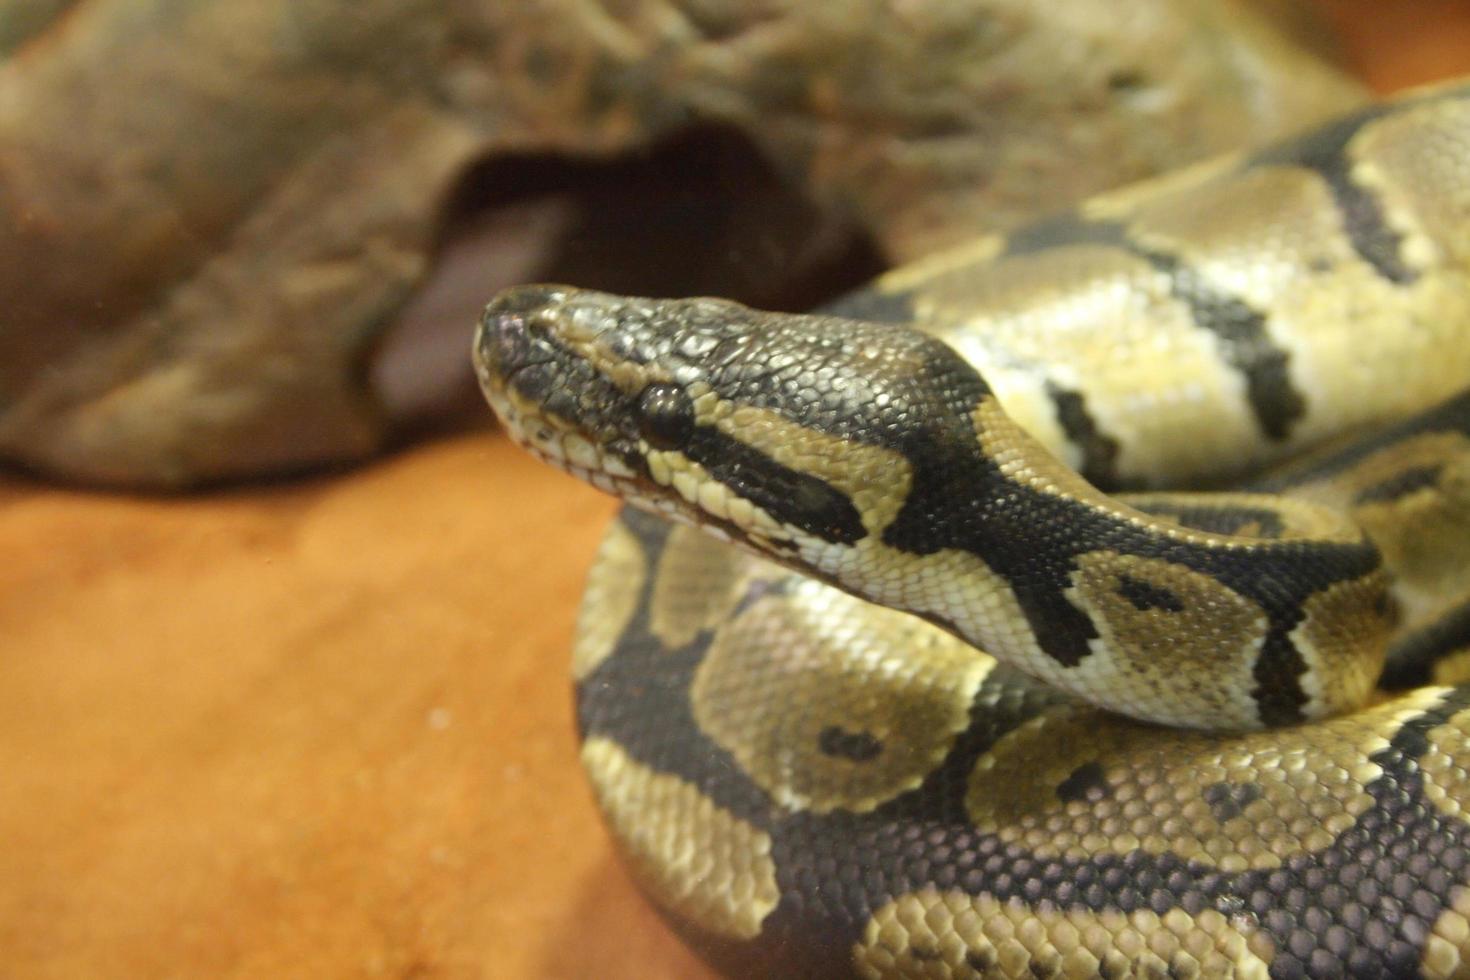 Ball python close-up photo